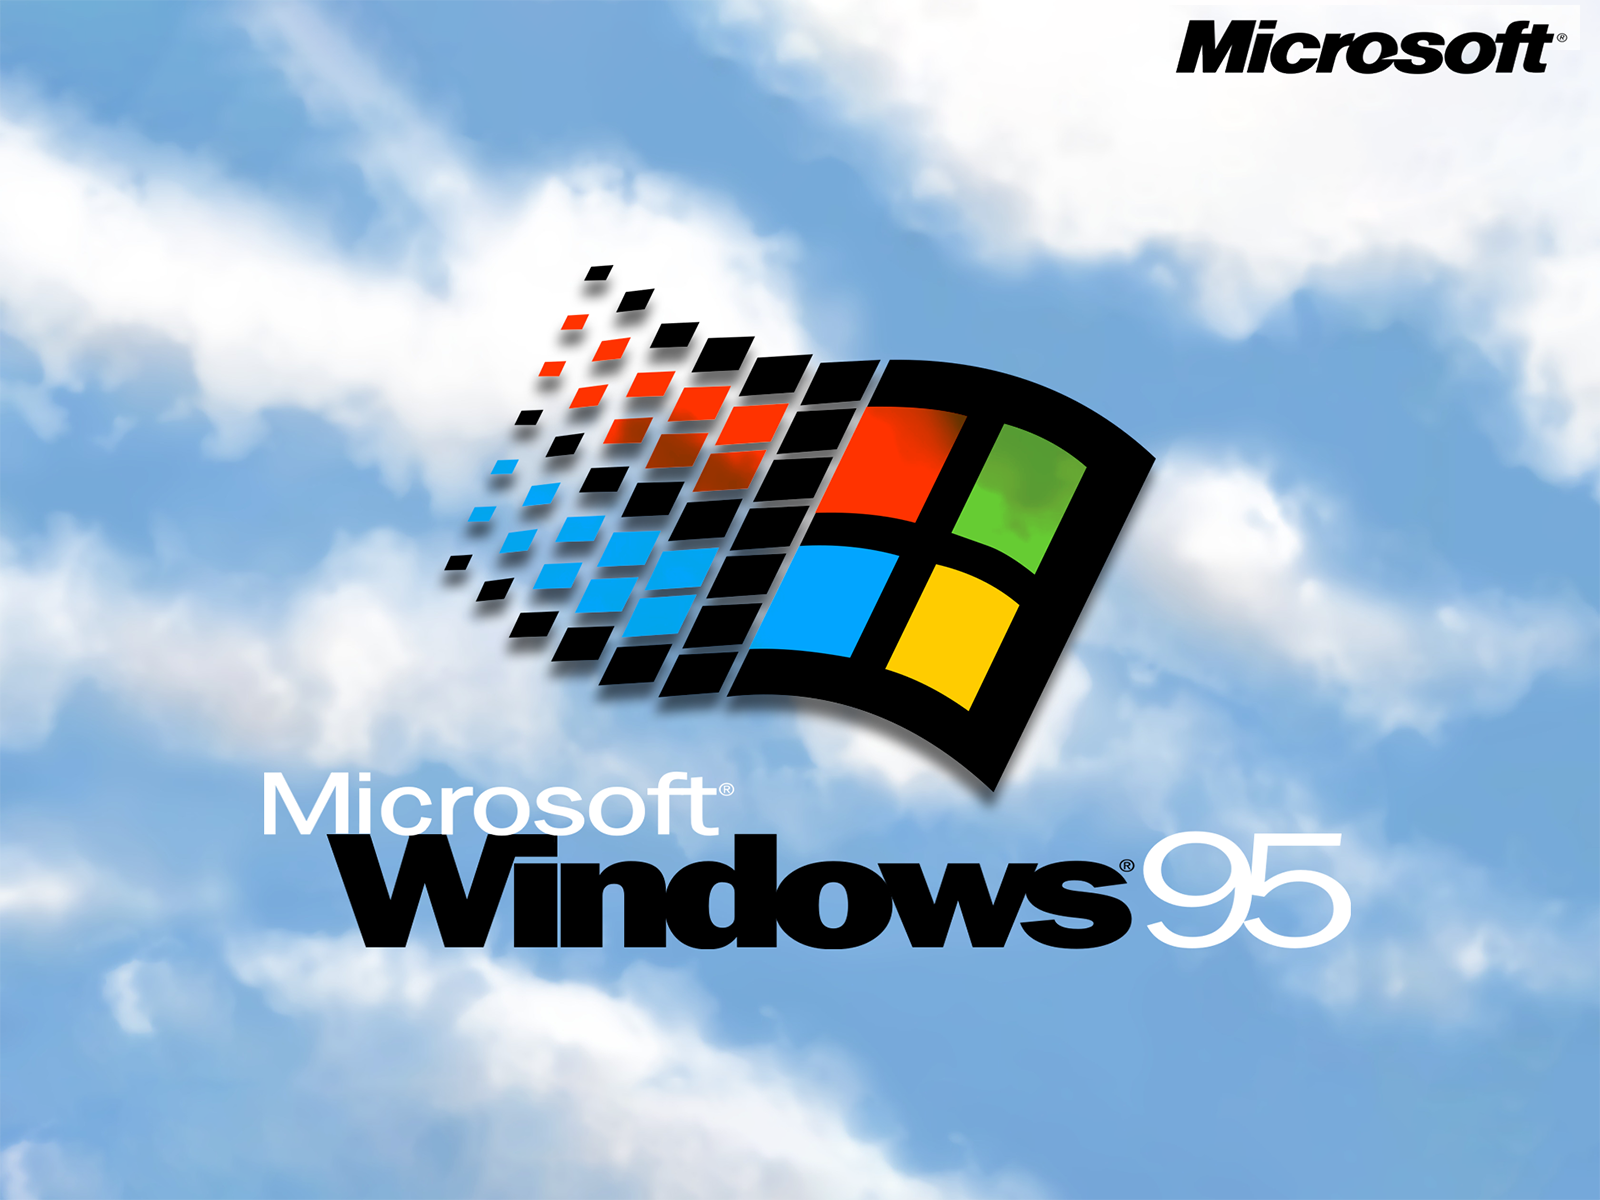 Windows 95 Remake By Nabil Mir On Dribbble